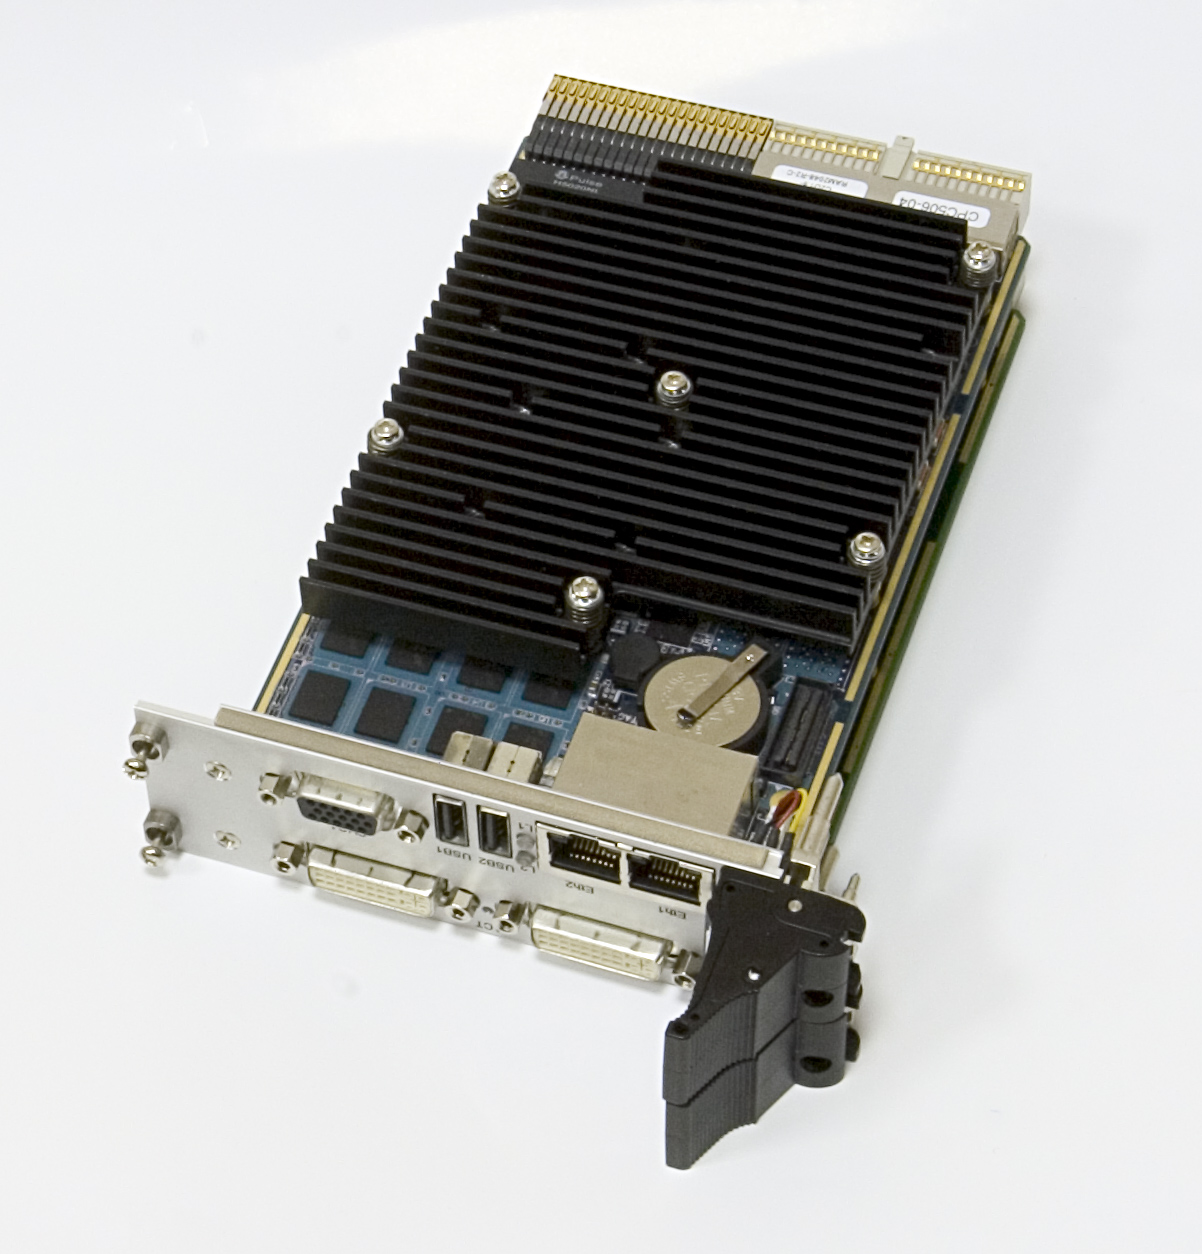 Процессорная плата CompactPCI 3U (PICMG2.30) на базе процессоров семейства Intel Core2Duo до 2.2 ГГц, 2хGigabit Ethernet и Serial ATA